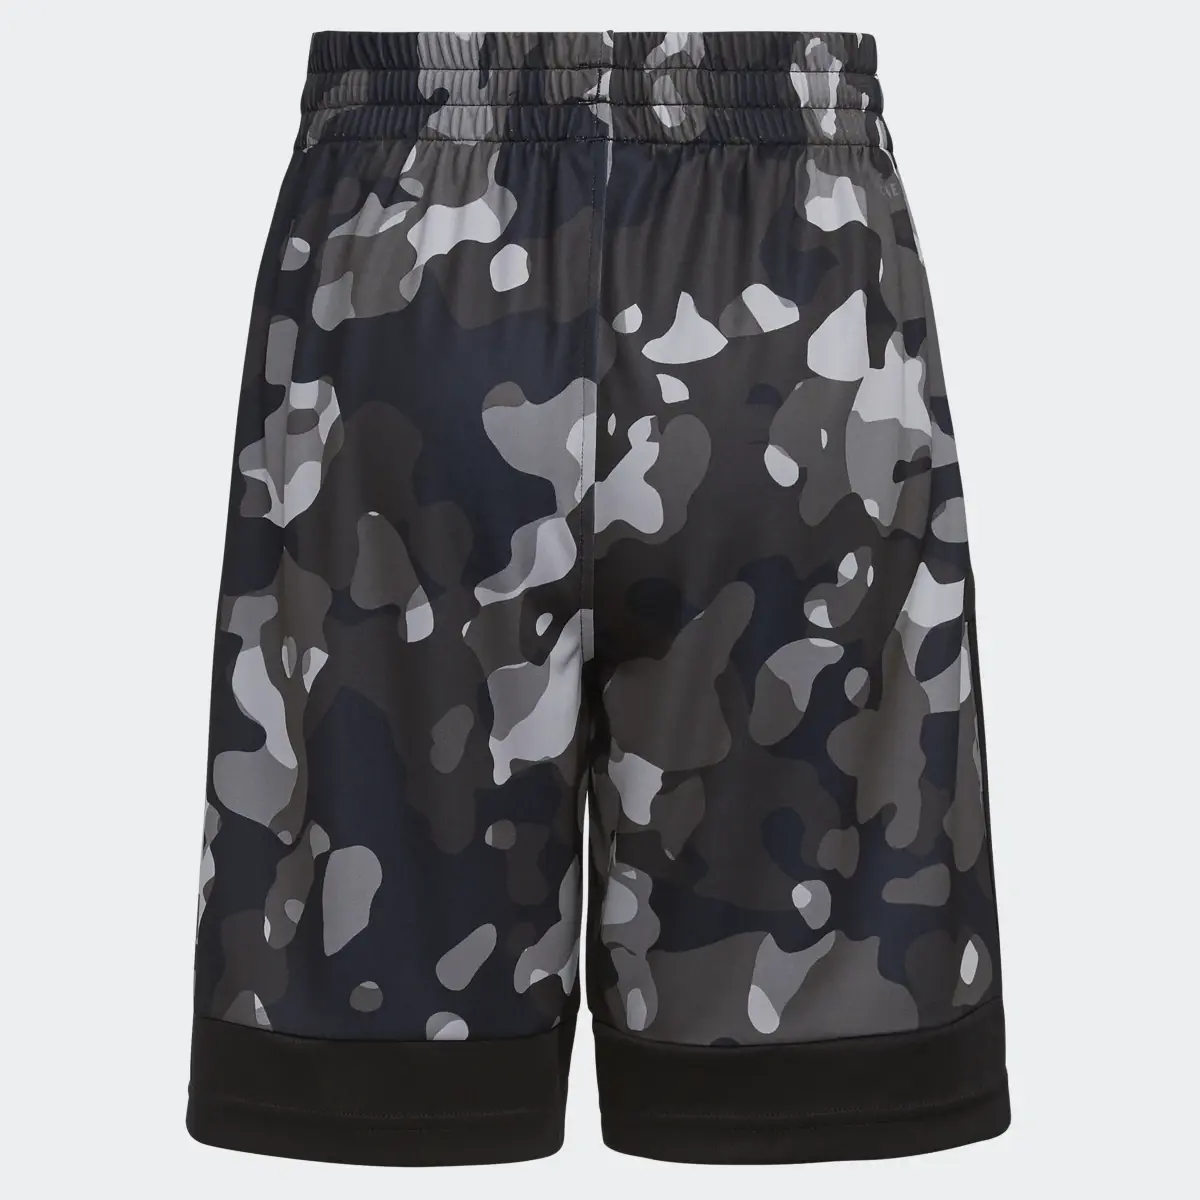 Adidas Core Camo Allover Print Shorts (Extended Size). 3